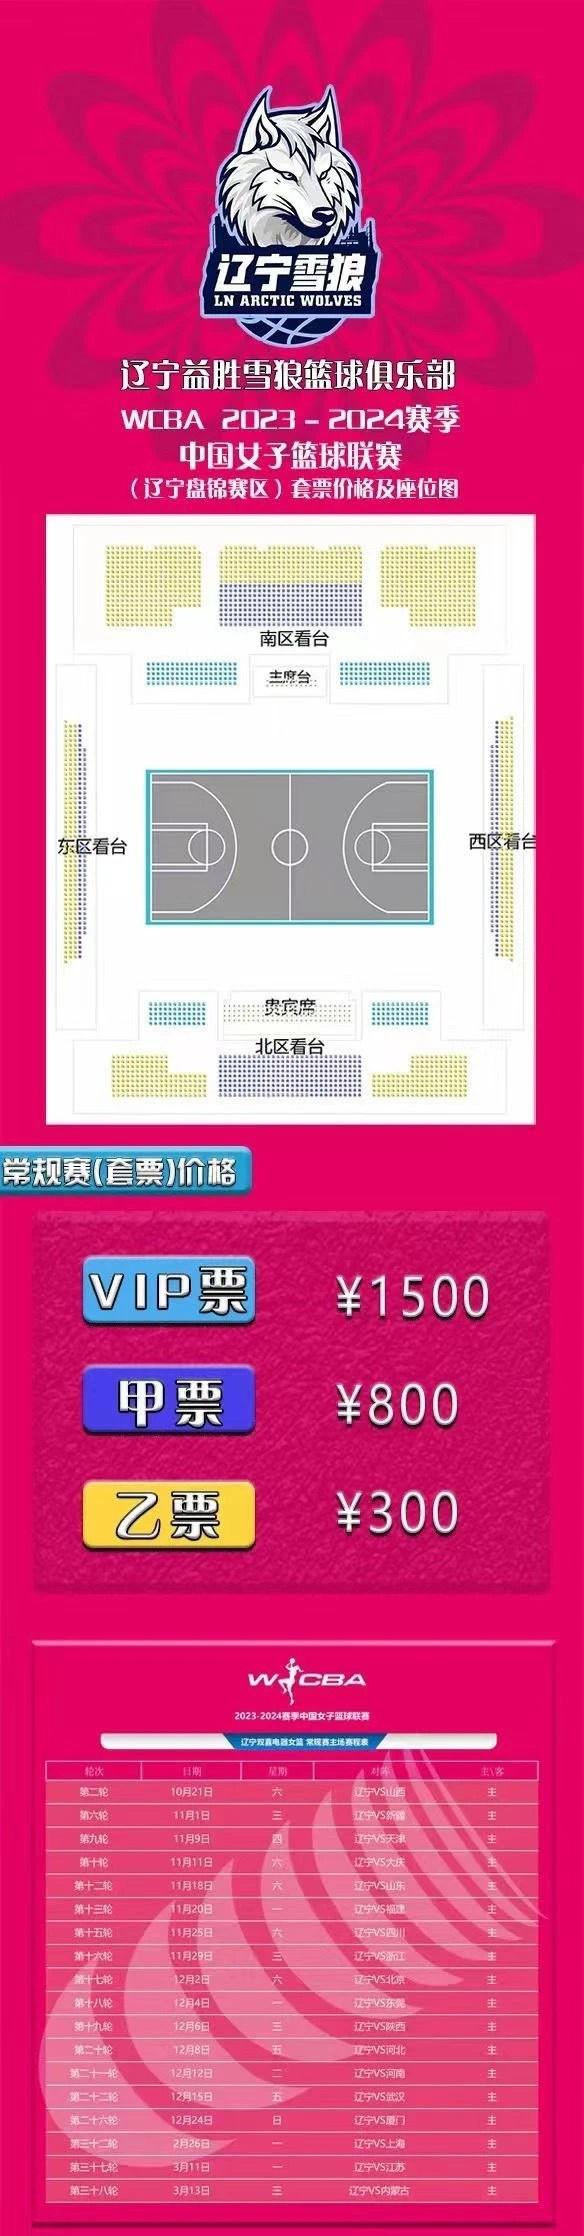 WCBA球队辽宁女篮新赛季主场套票最高仅1500元 最低只要300元(1)